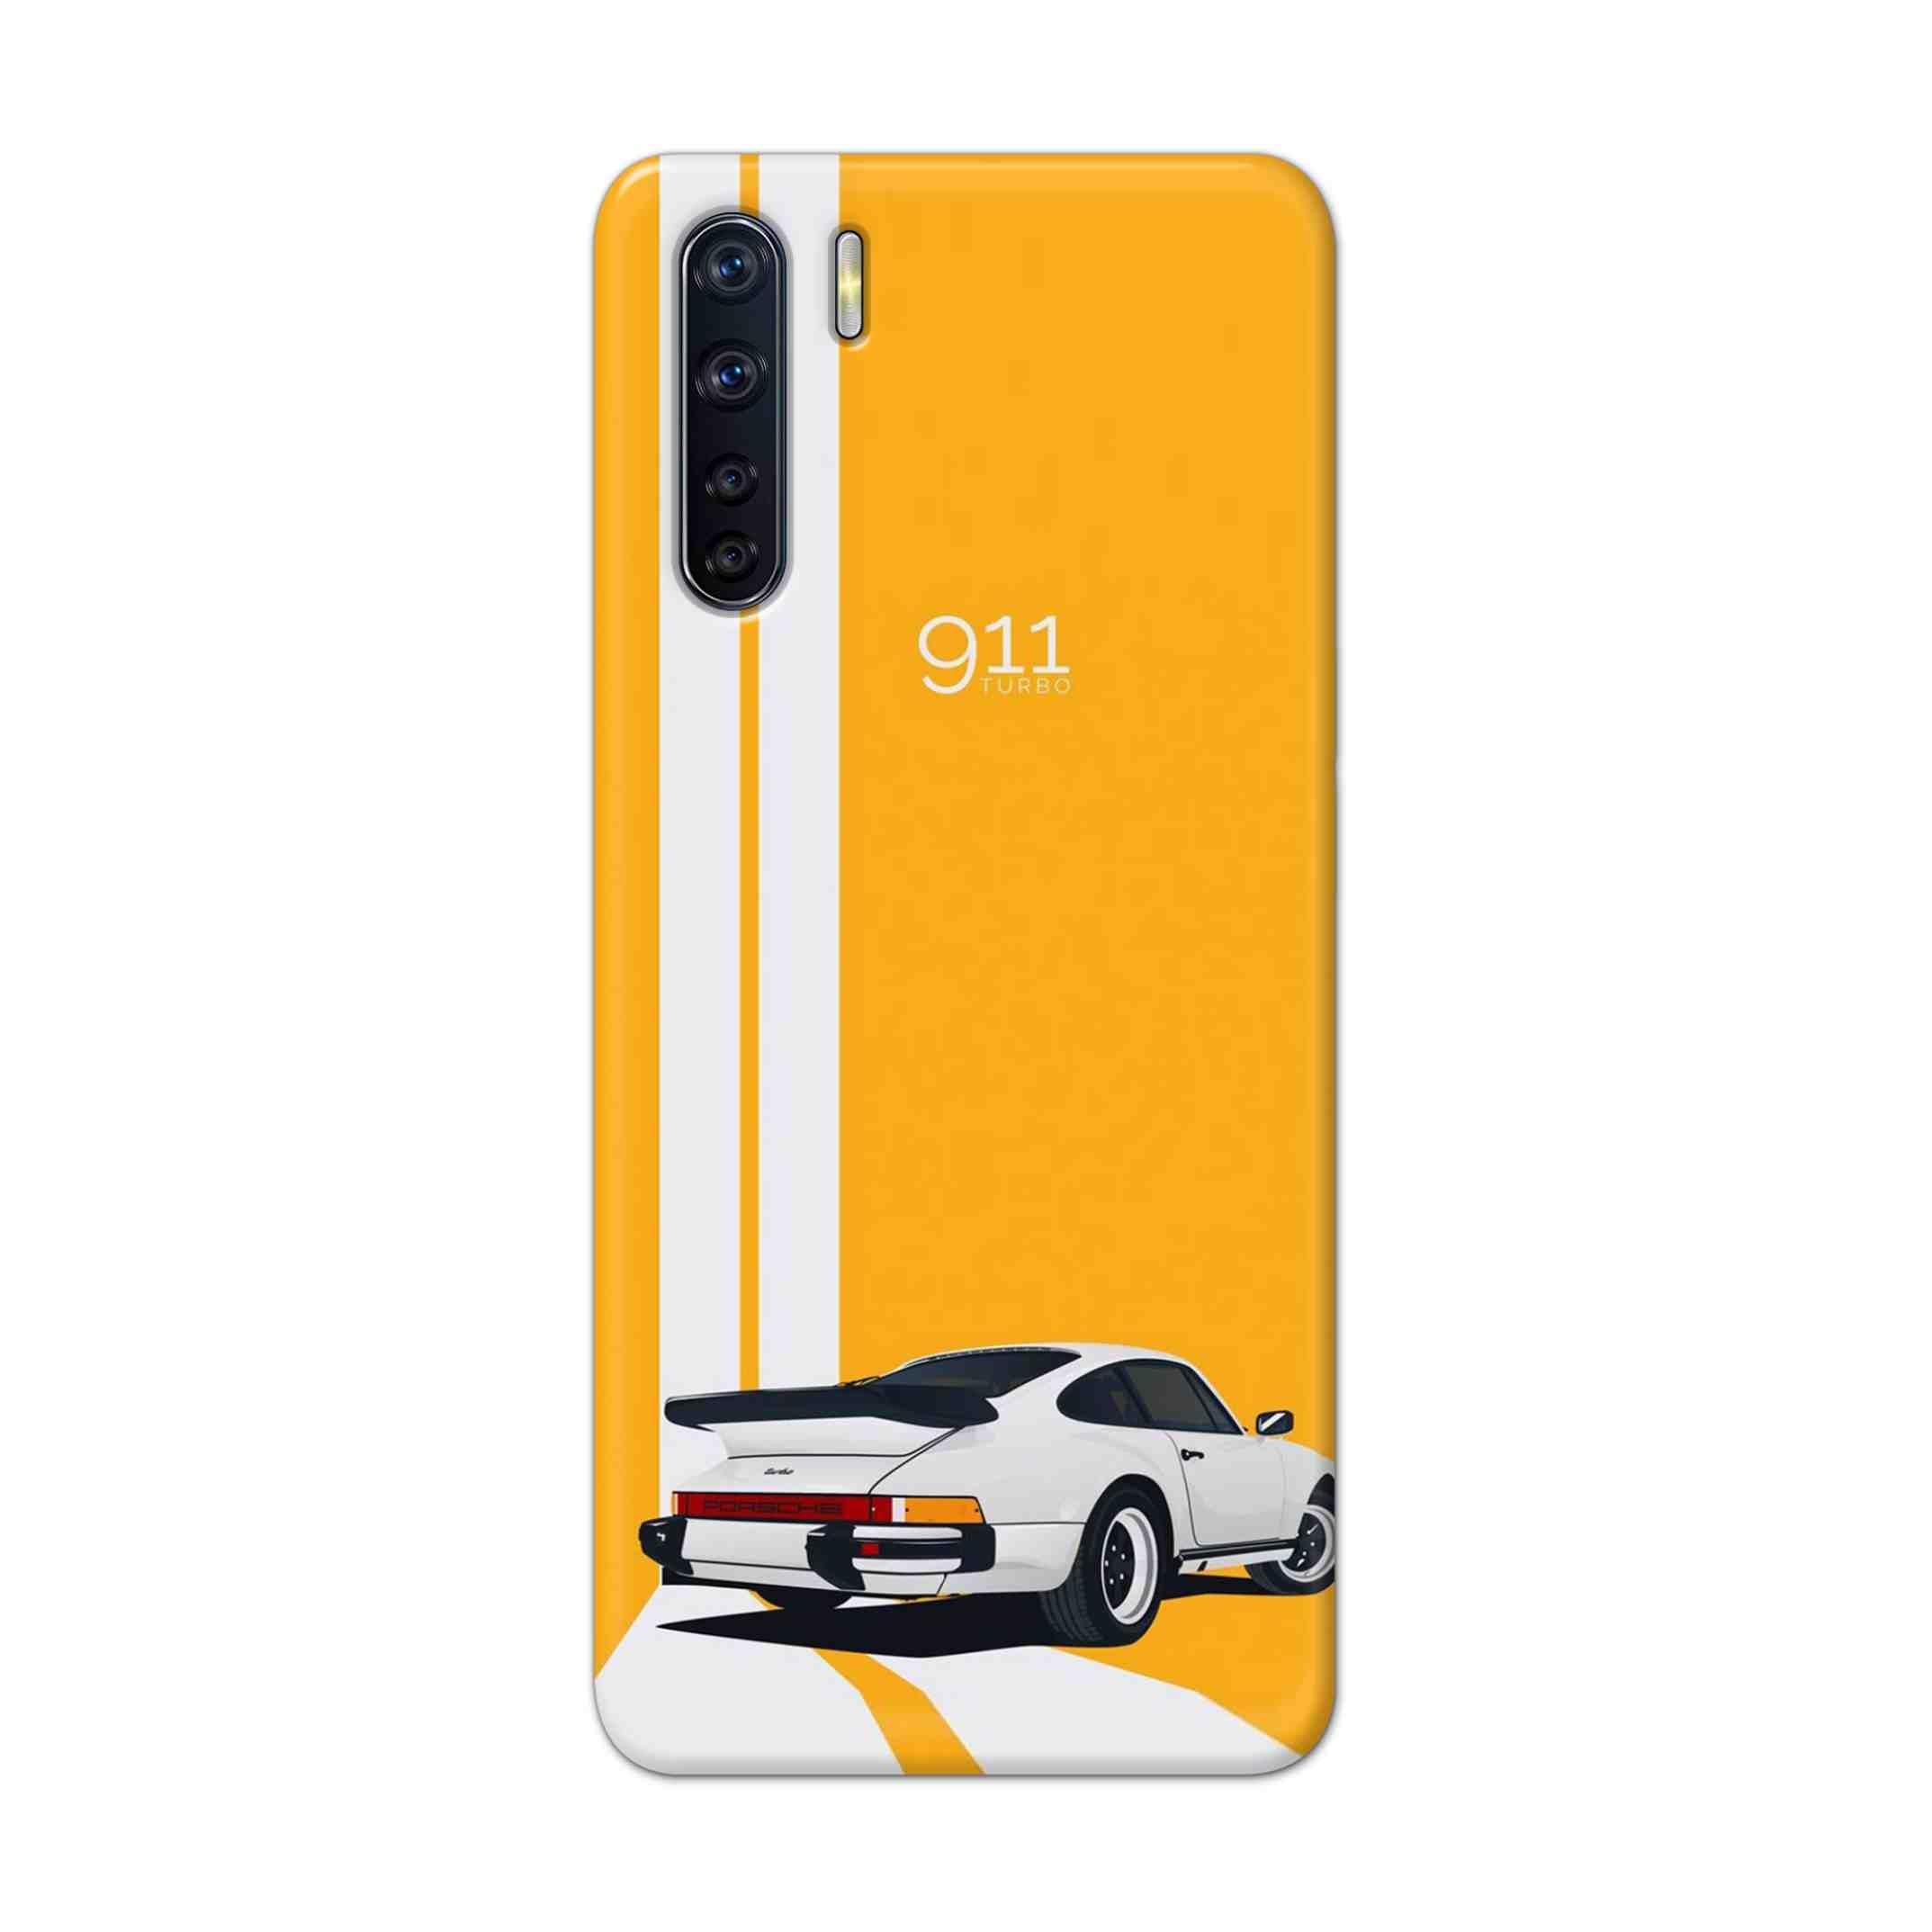 Buy 911 Gt Porche Hard Back Mobile Phone Case Cover For OPPO F15 Online